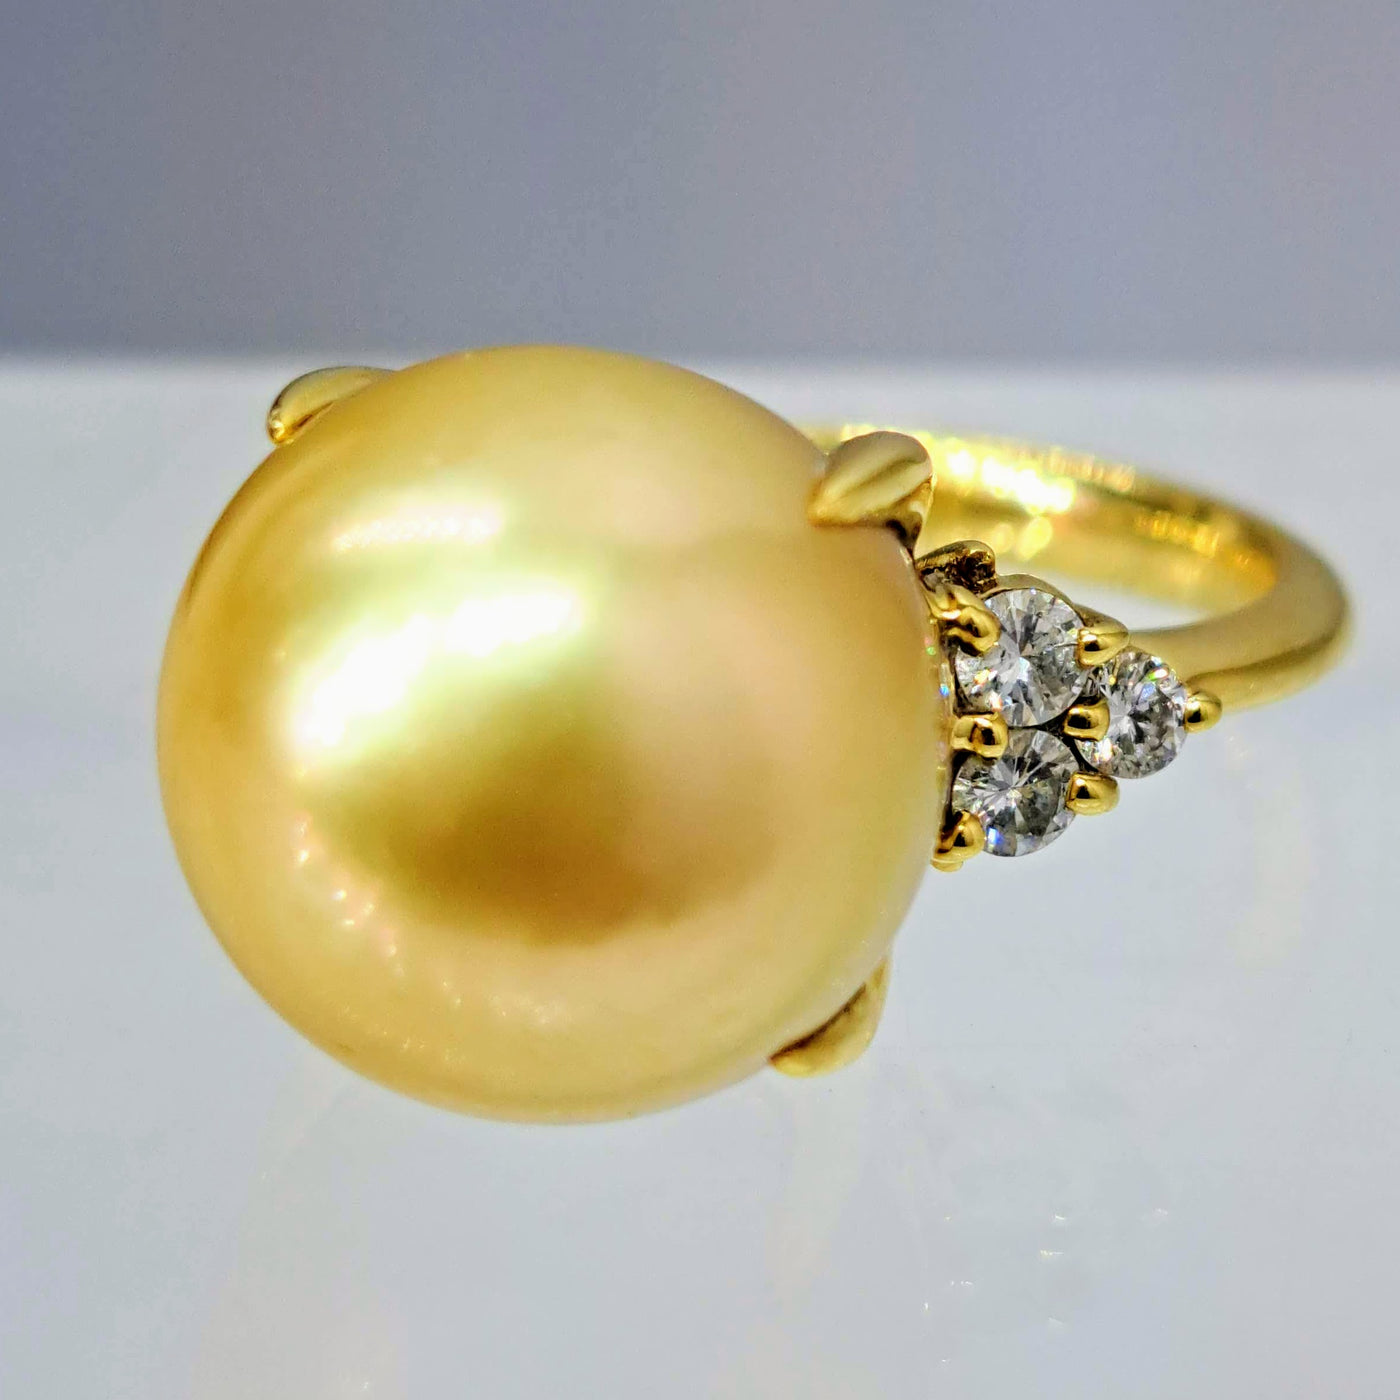 "Trophy Wife" Sz 6 Ring - Pearl, Diamond, 18K Gold